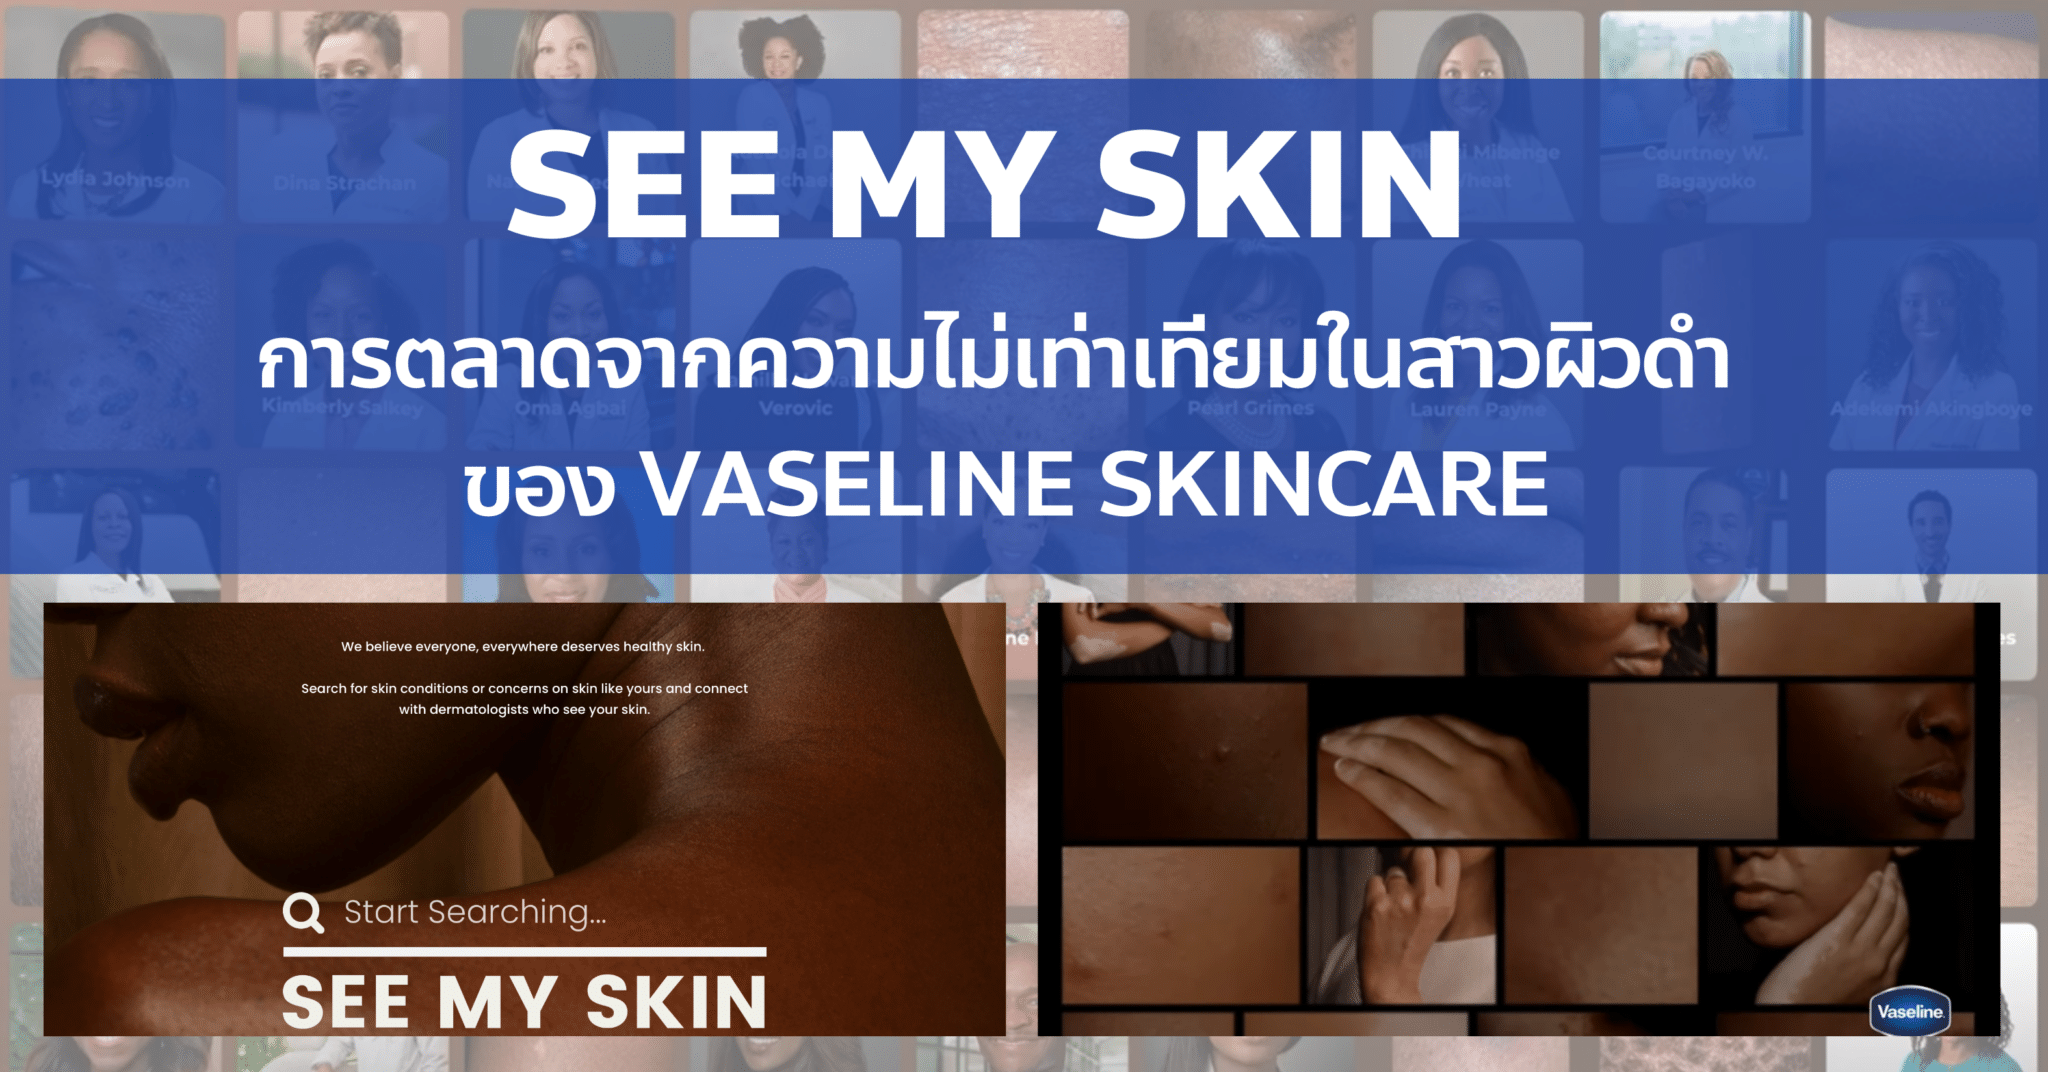 See my skin แคมเปญ จากความไม่เท่าเทียมในสาวผิวดำ ของ Vaseline